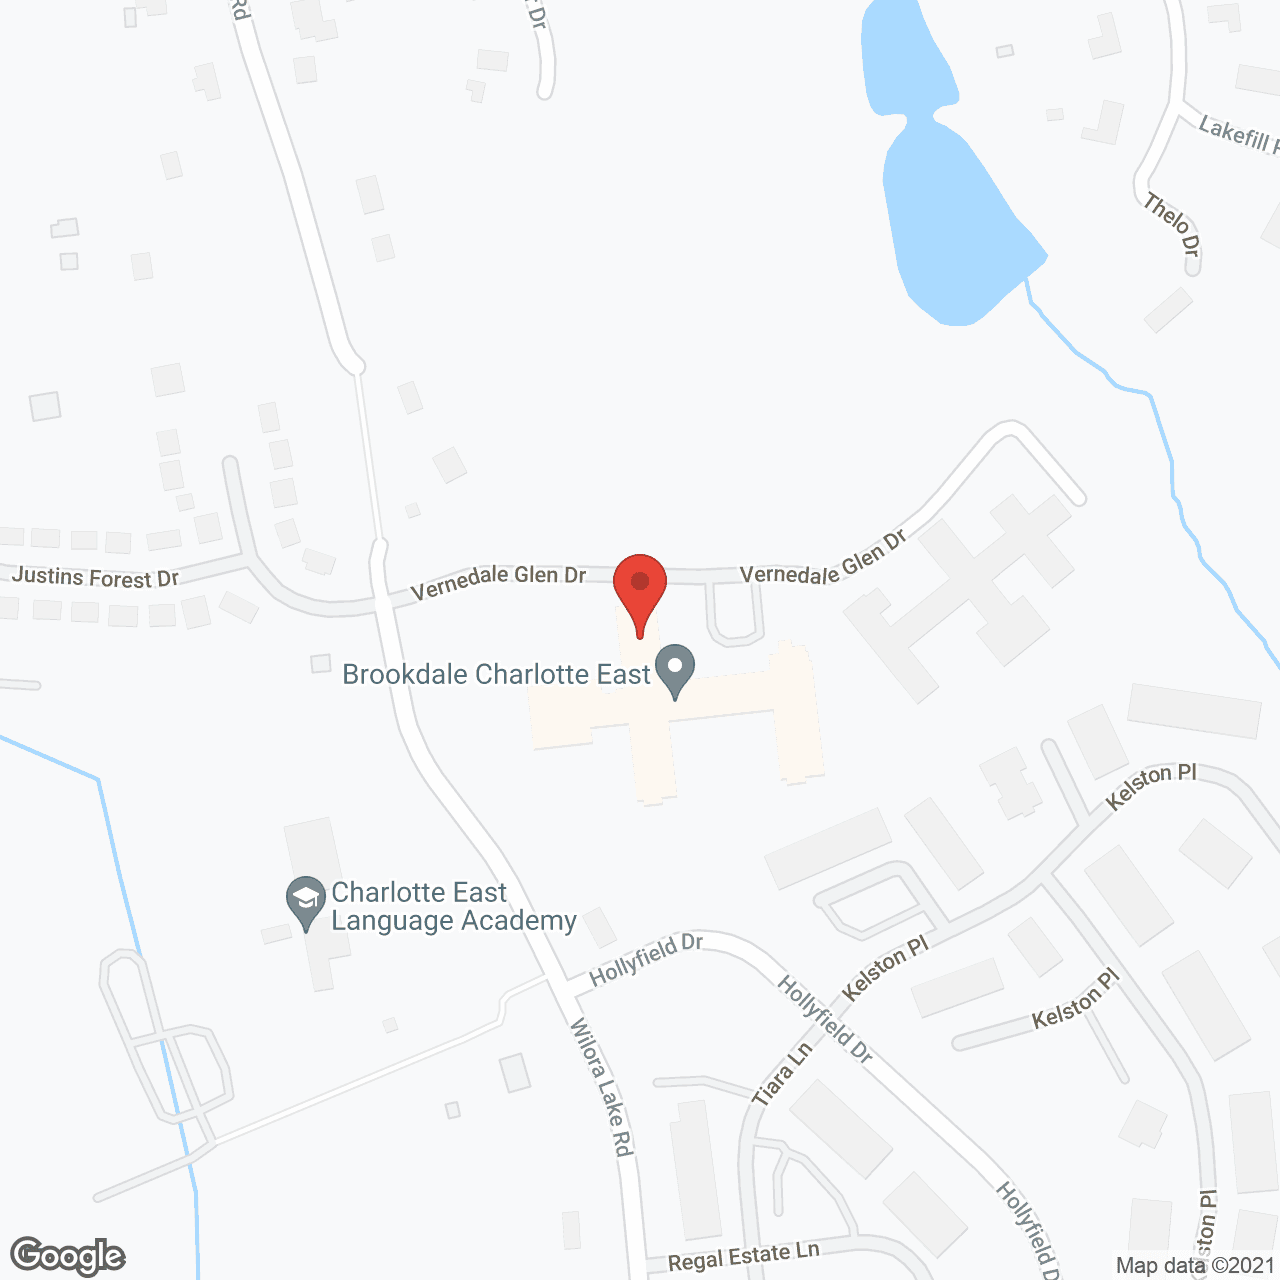 Brookdale Charlotte East in google map